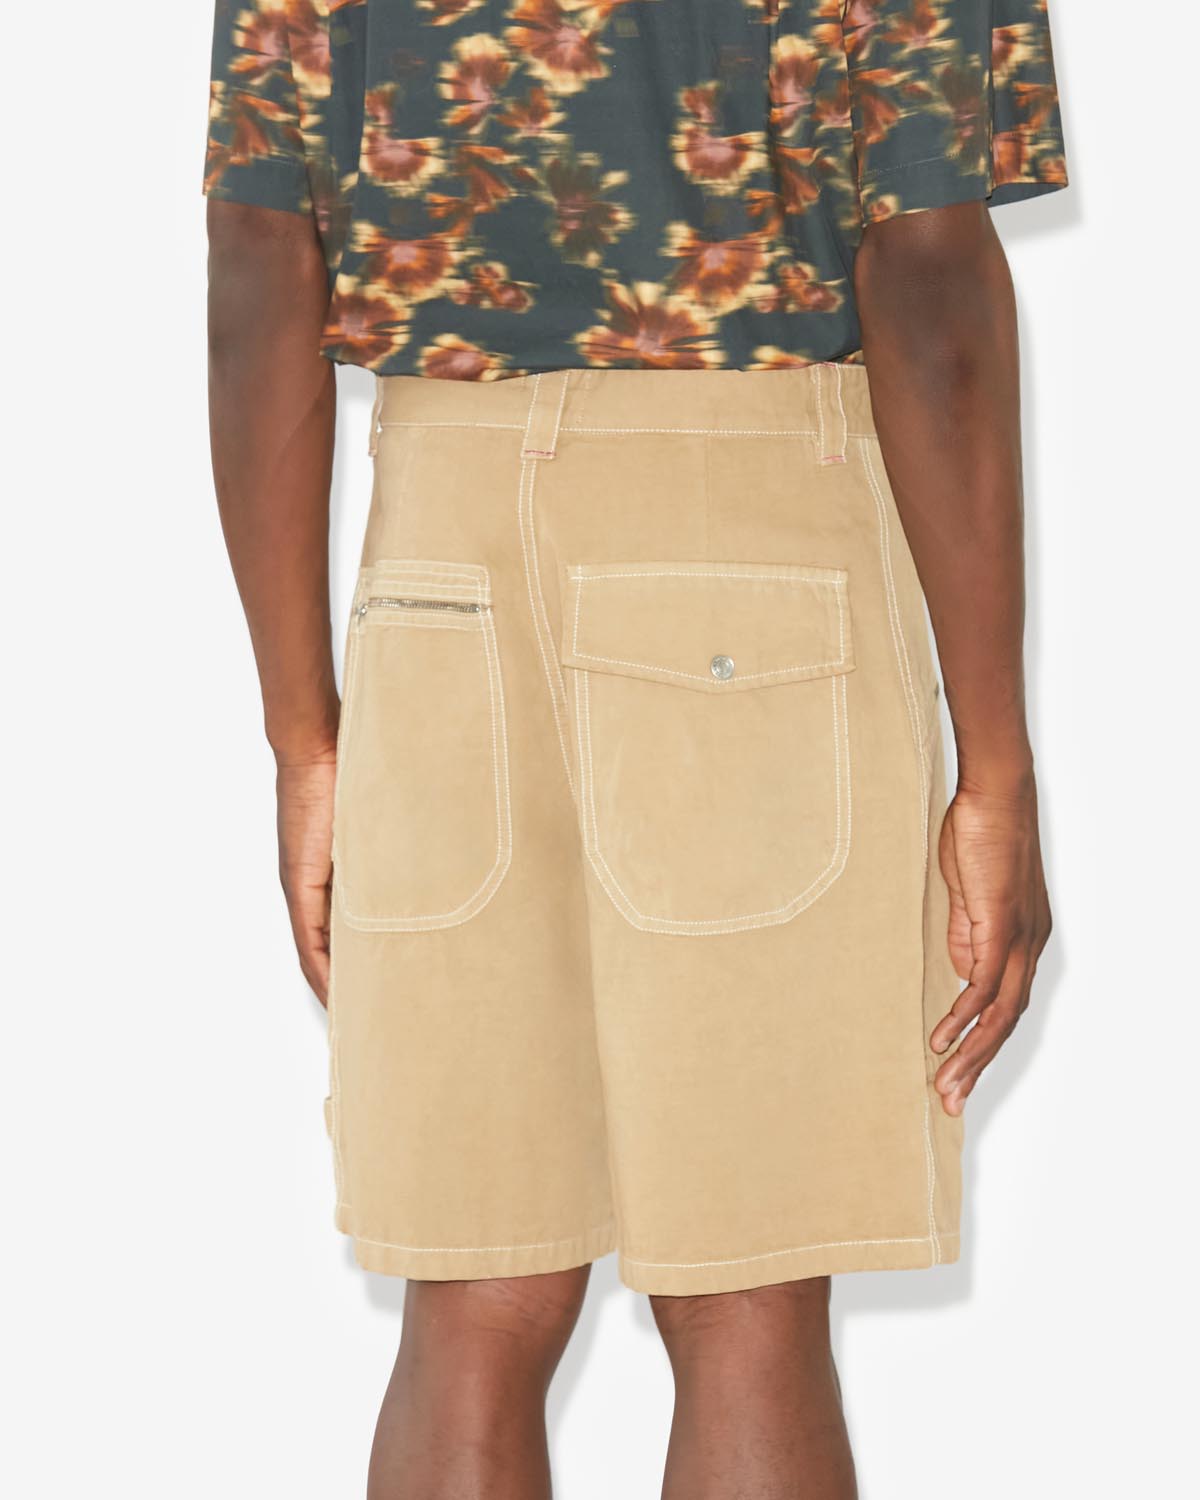 Feoni shorts Man Sahara 3